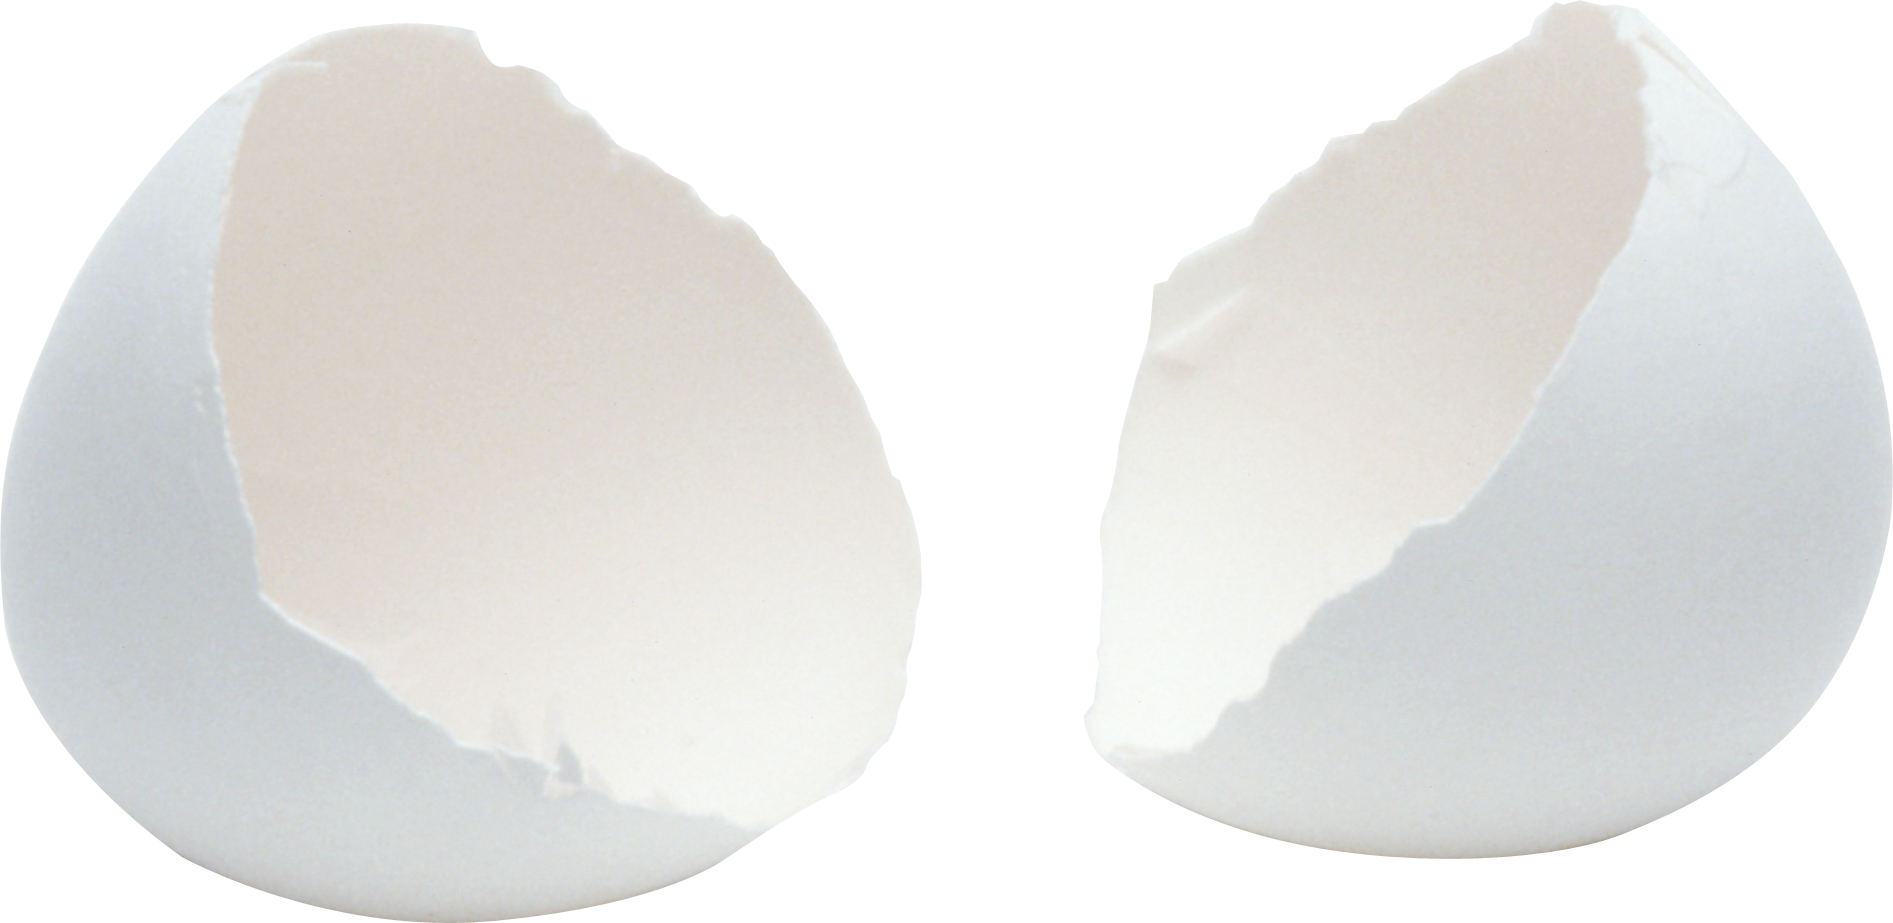 Cracked Egg Png Image - Cracked Egg, Transparent background PNG HD thumbnail